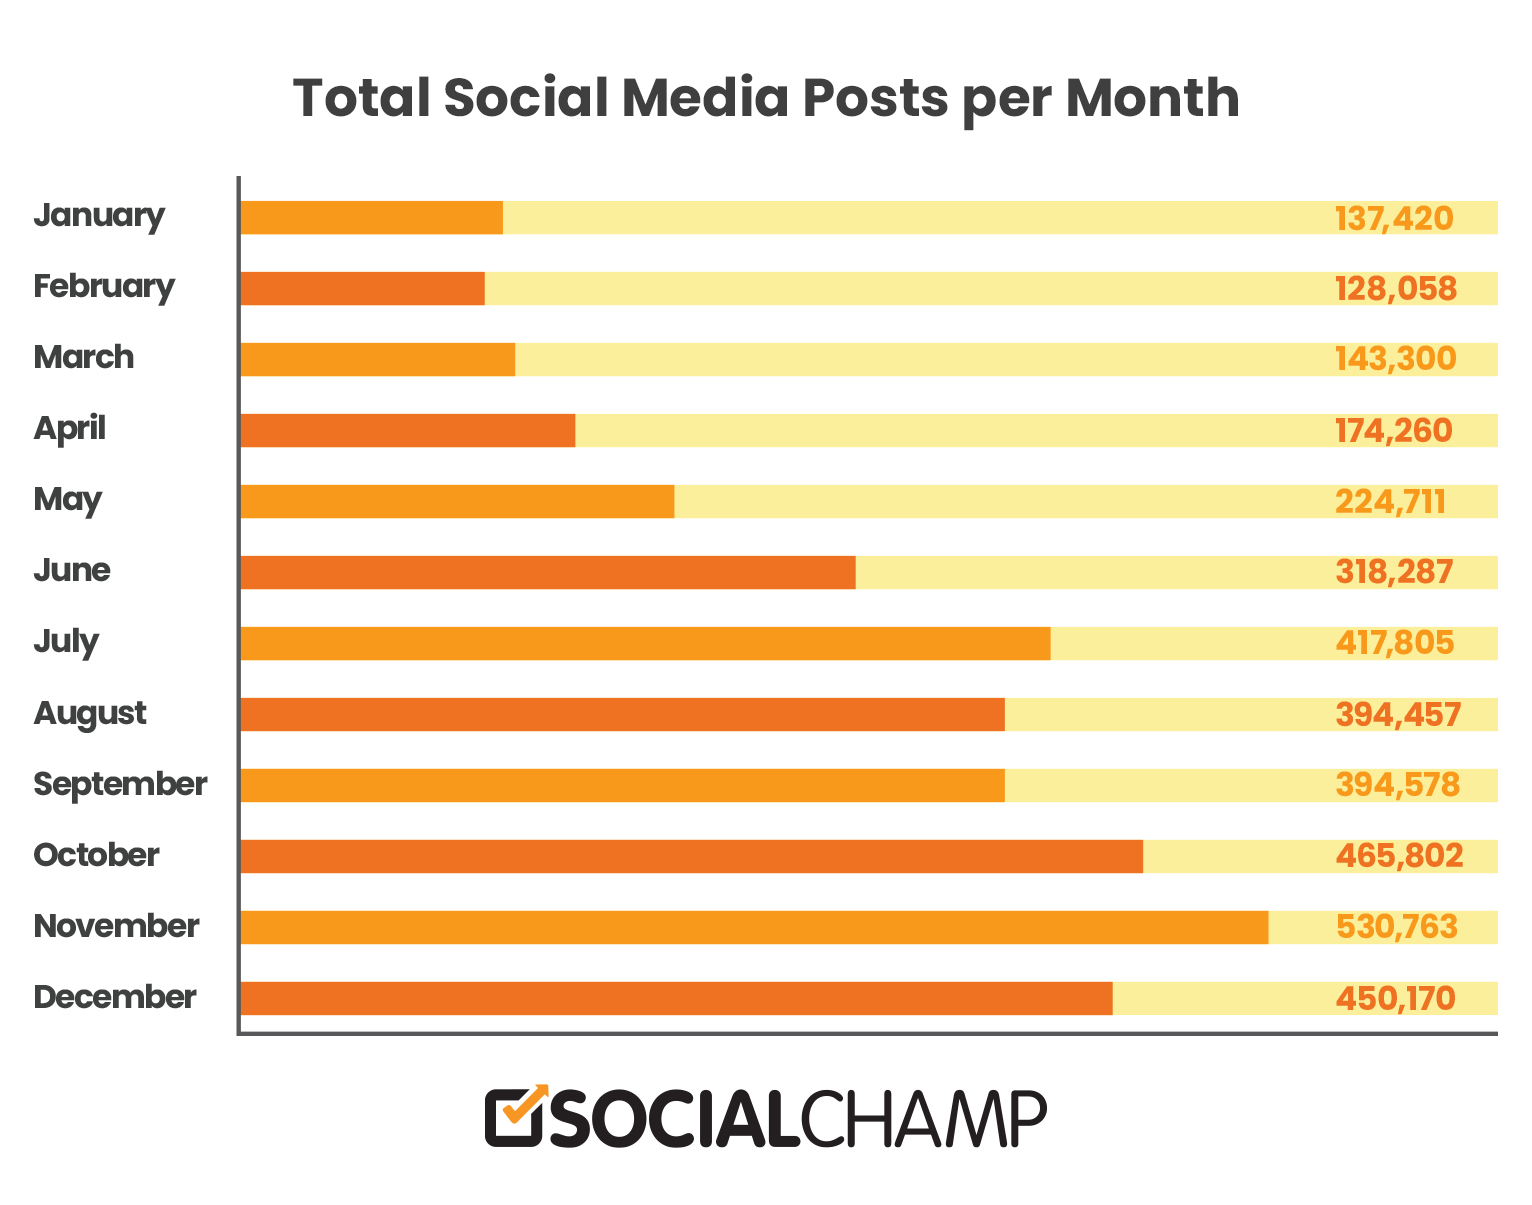 Social Champ 每月在社交媒体上发布的帖子总数